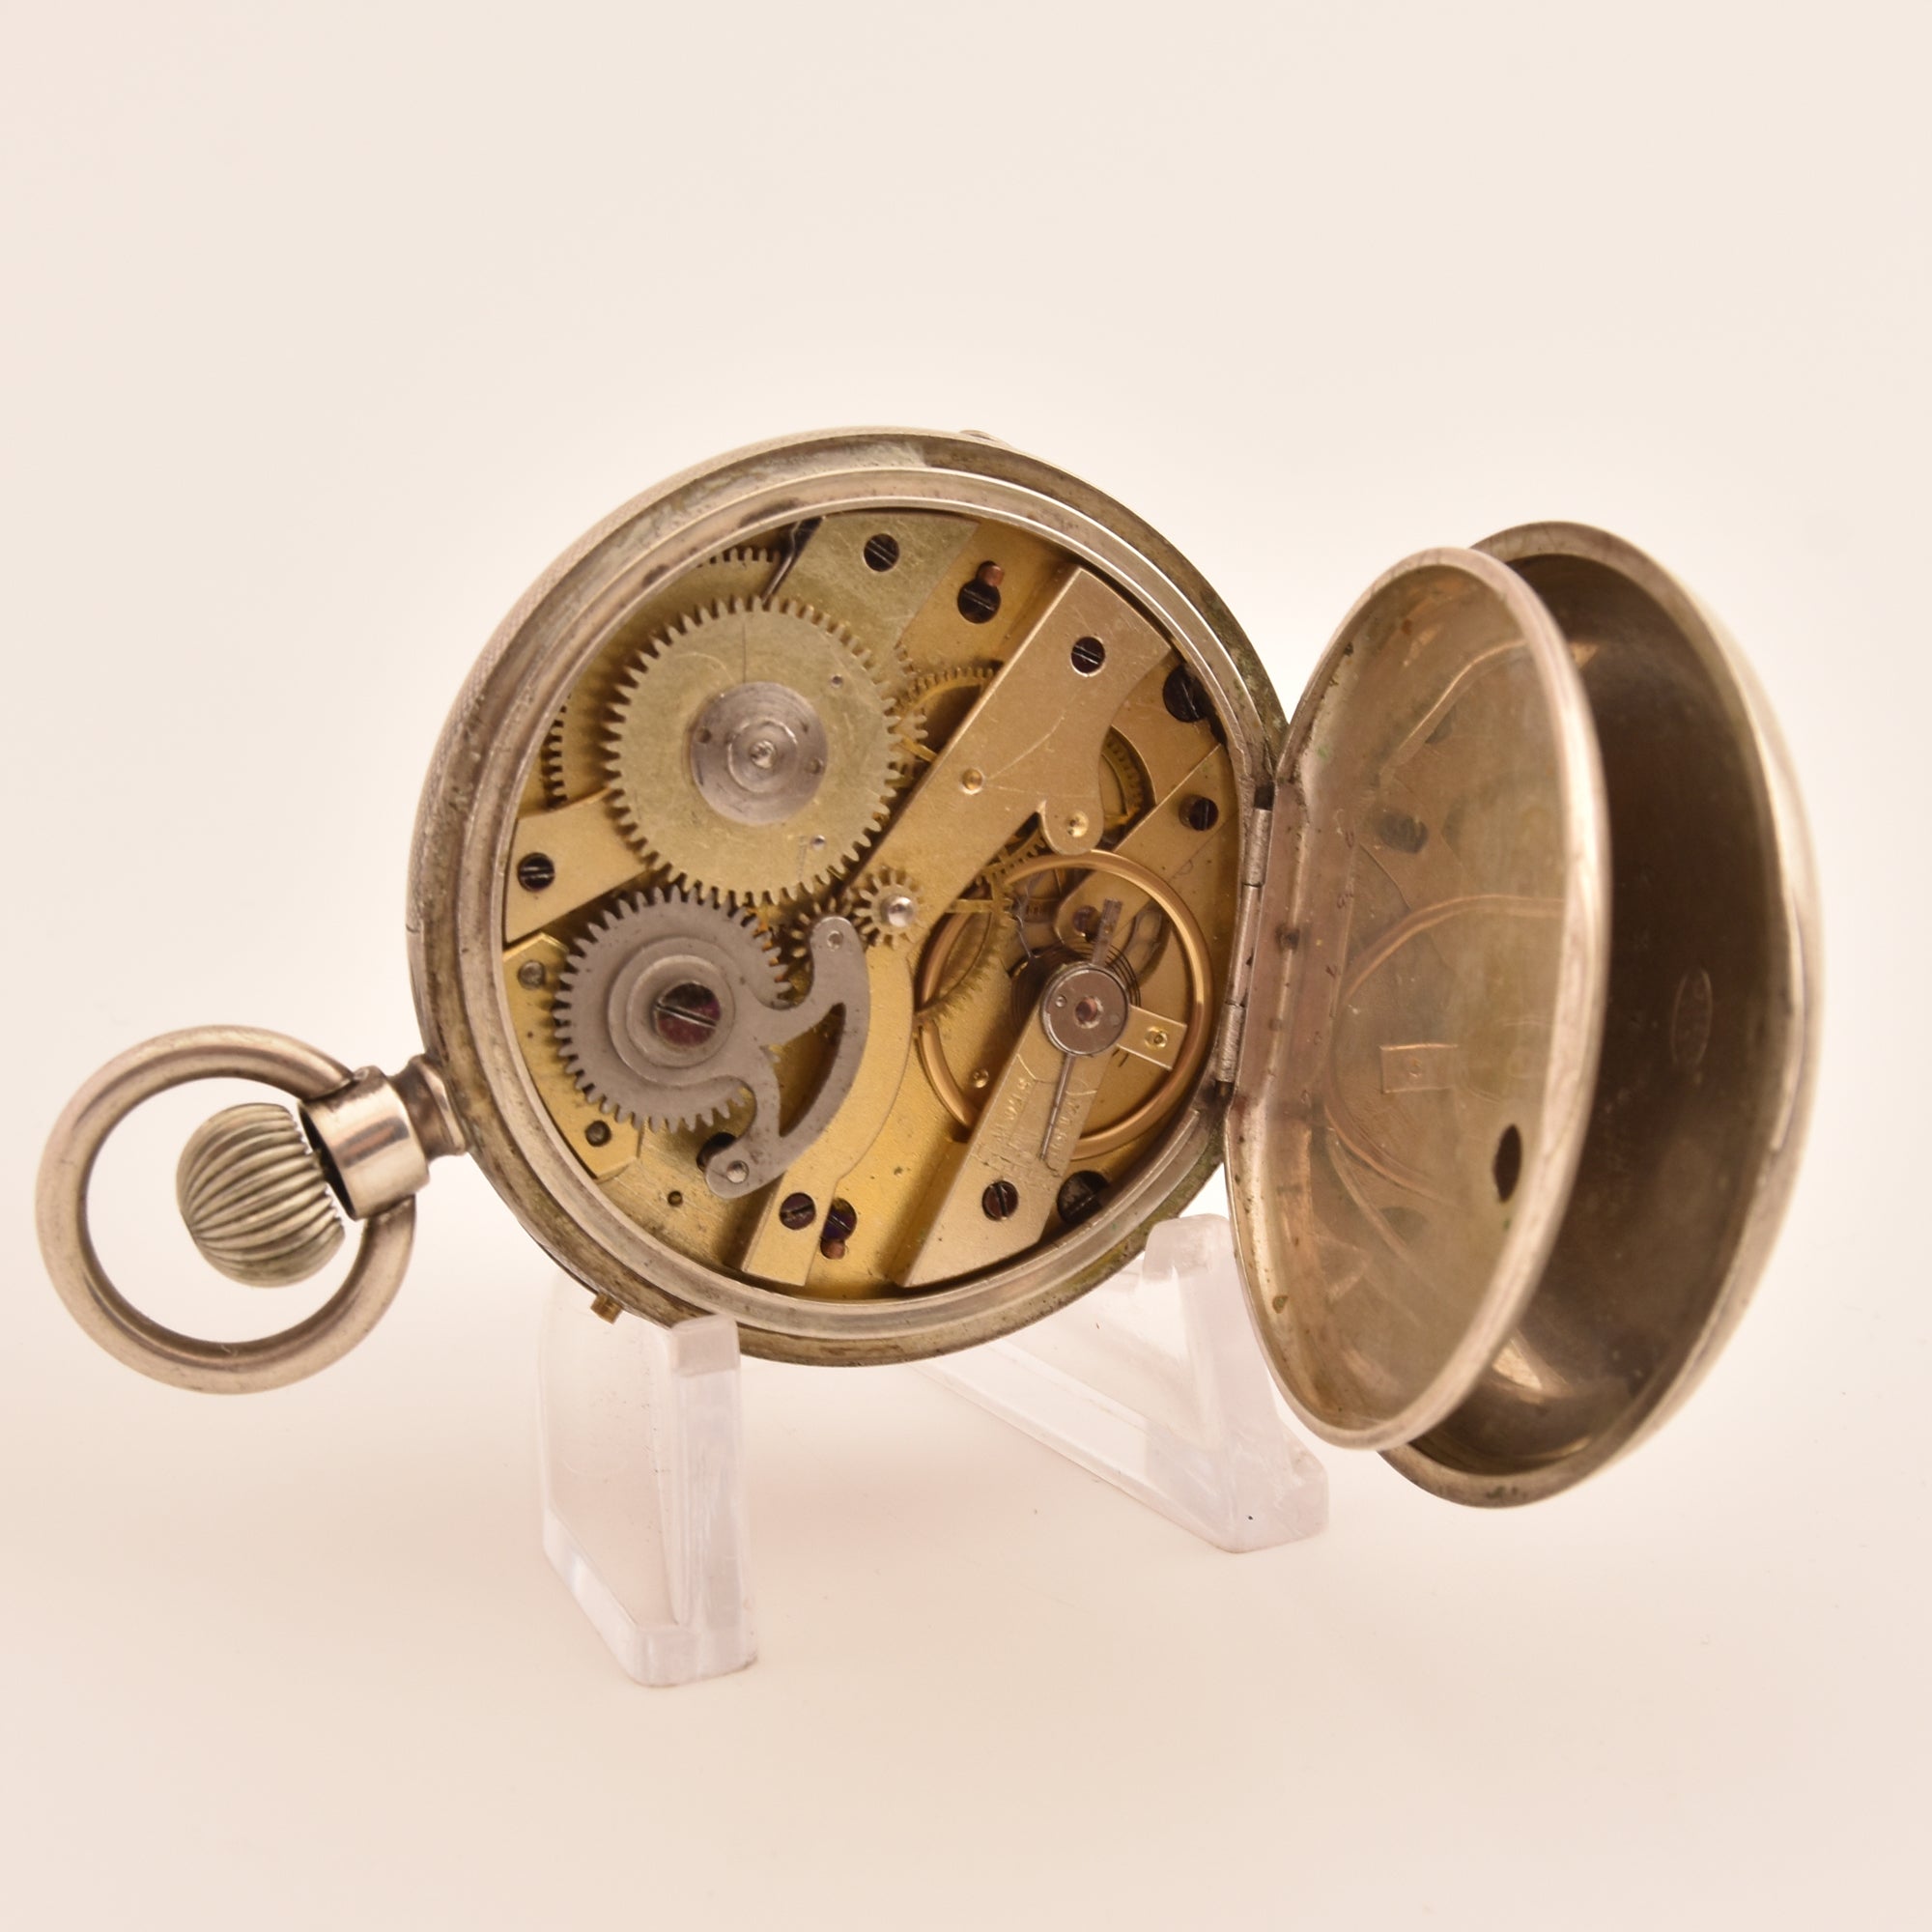 Pocket Watch Swiss half hunter circa 1890s